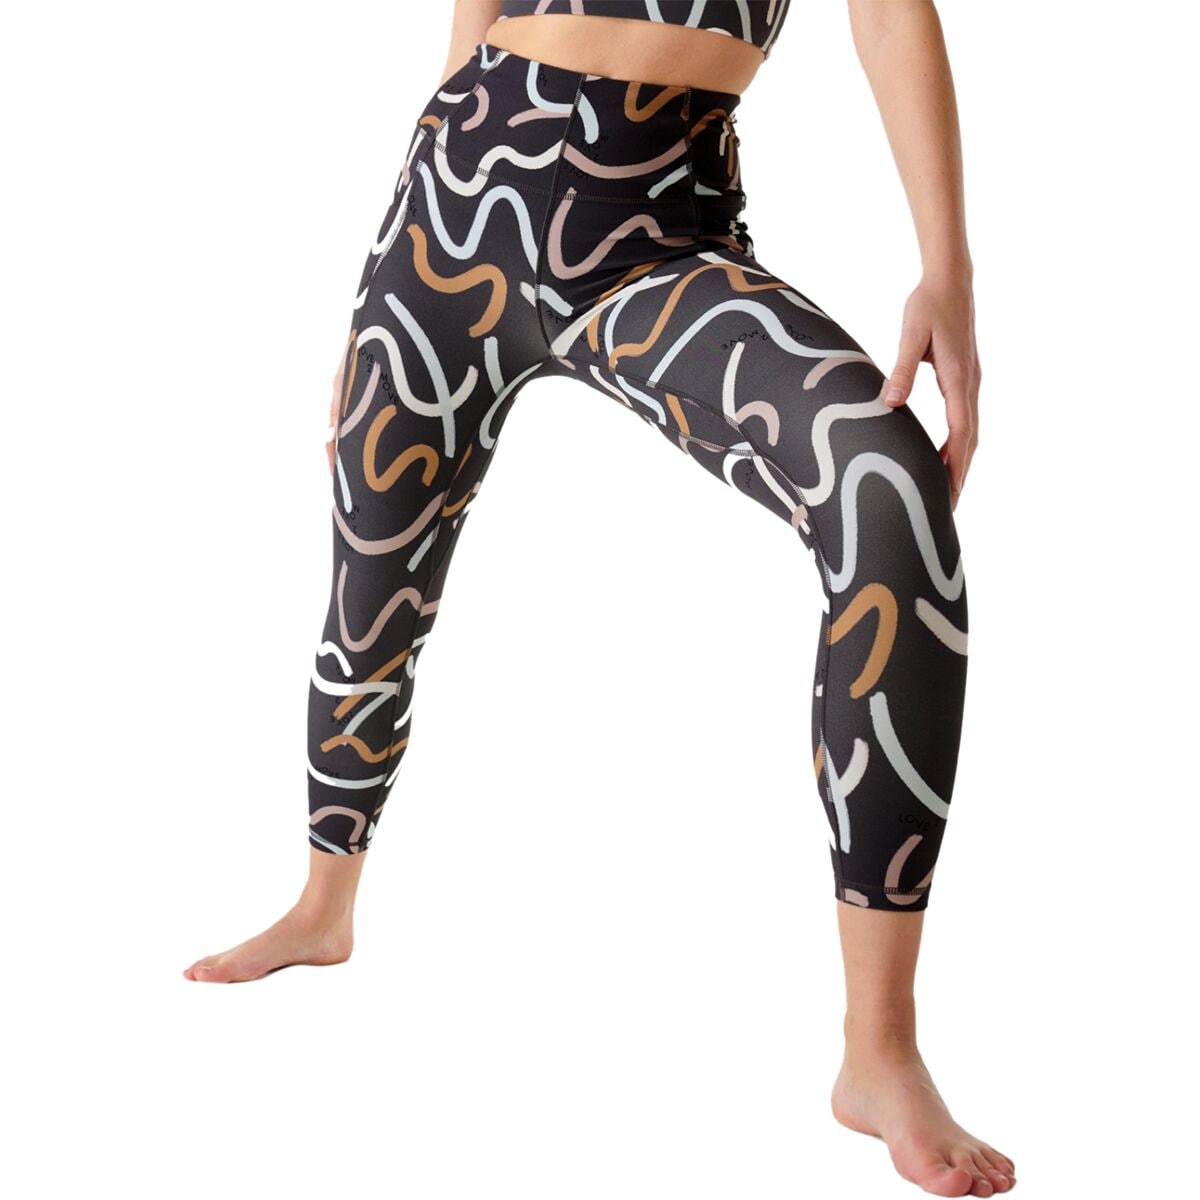 Sweaty Betty Super Soft 7/8 Yoga Legging - Women's